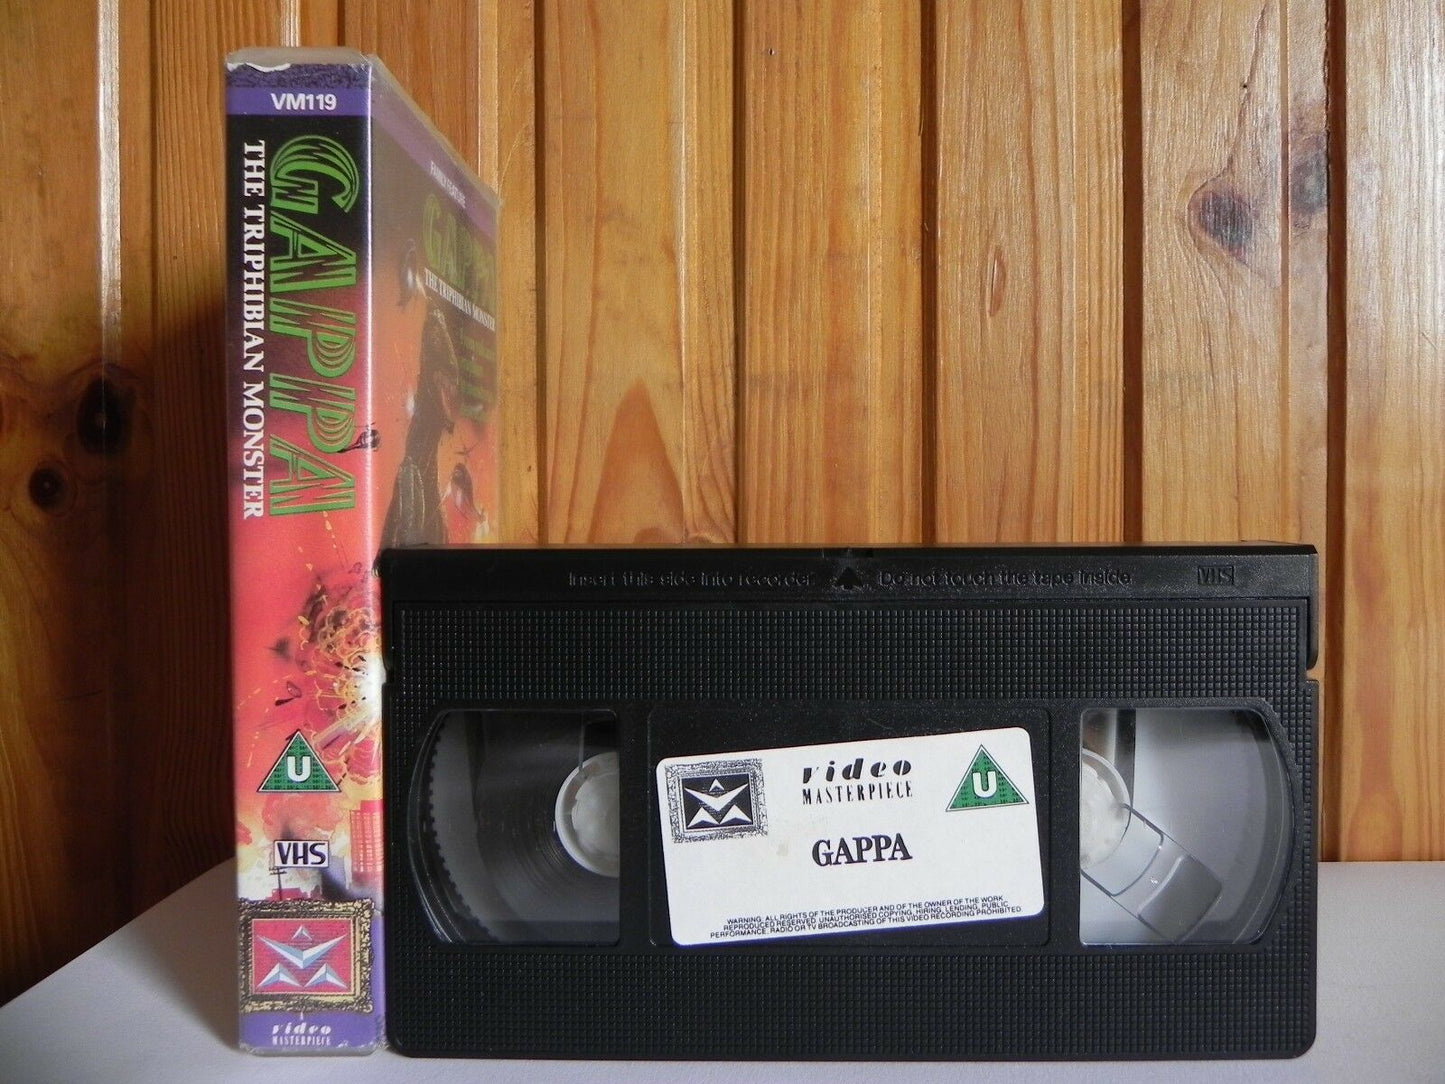 Gappa: The Triphibian Monster - Video Masterpiece - Fantasy - 78 Mins - Pal VHS-